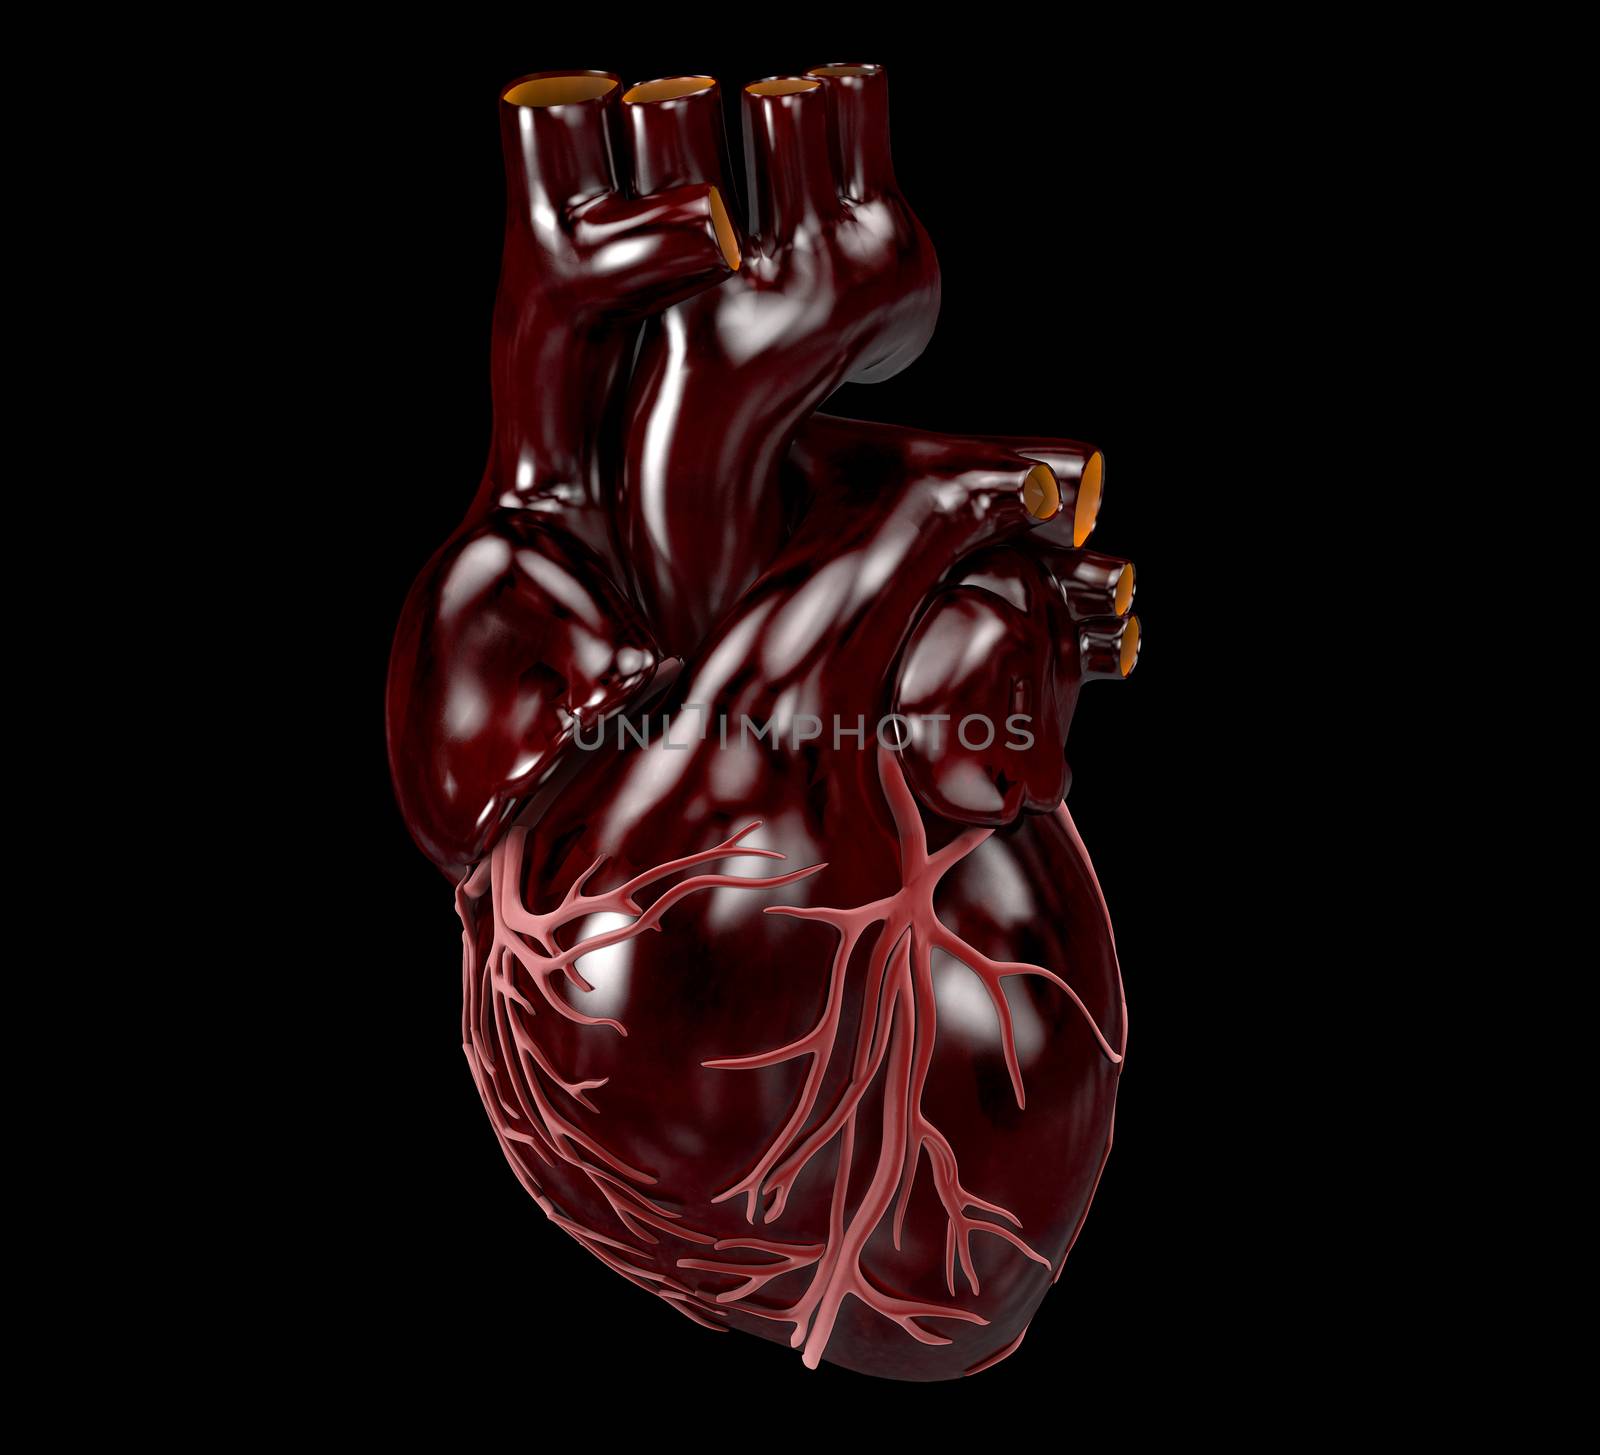 Human Heart - Anatomy of Human Heart 3d Illustration.